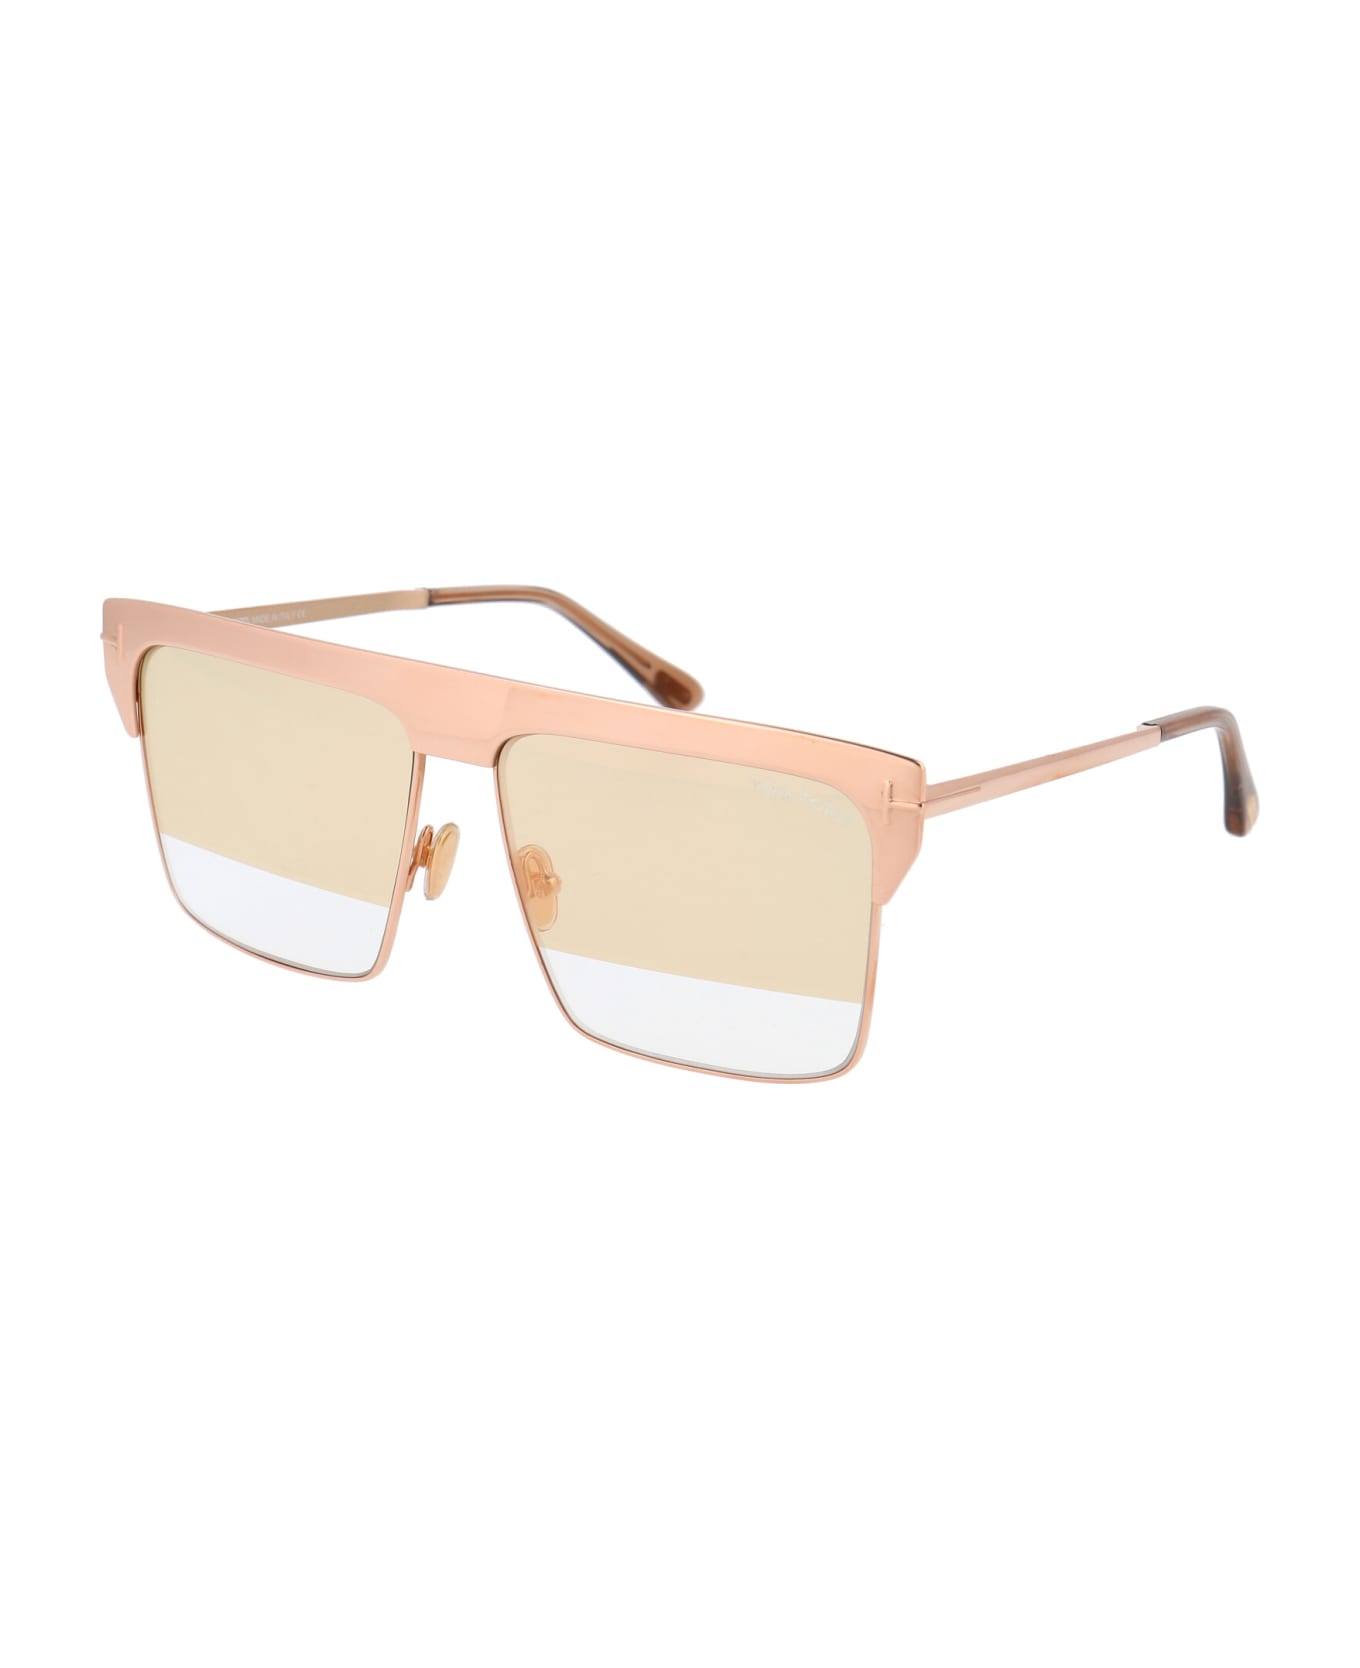 Tom Ford Eyewear West Sunglasses - 33Z ROSE GOLD